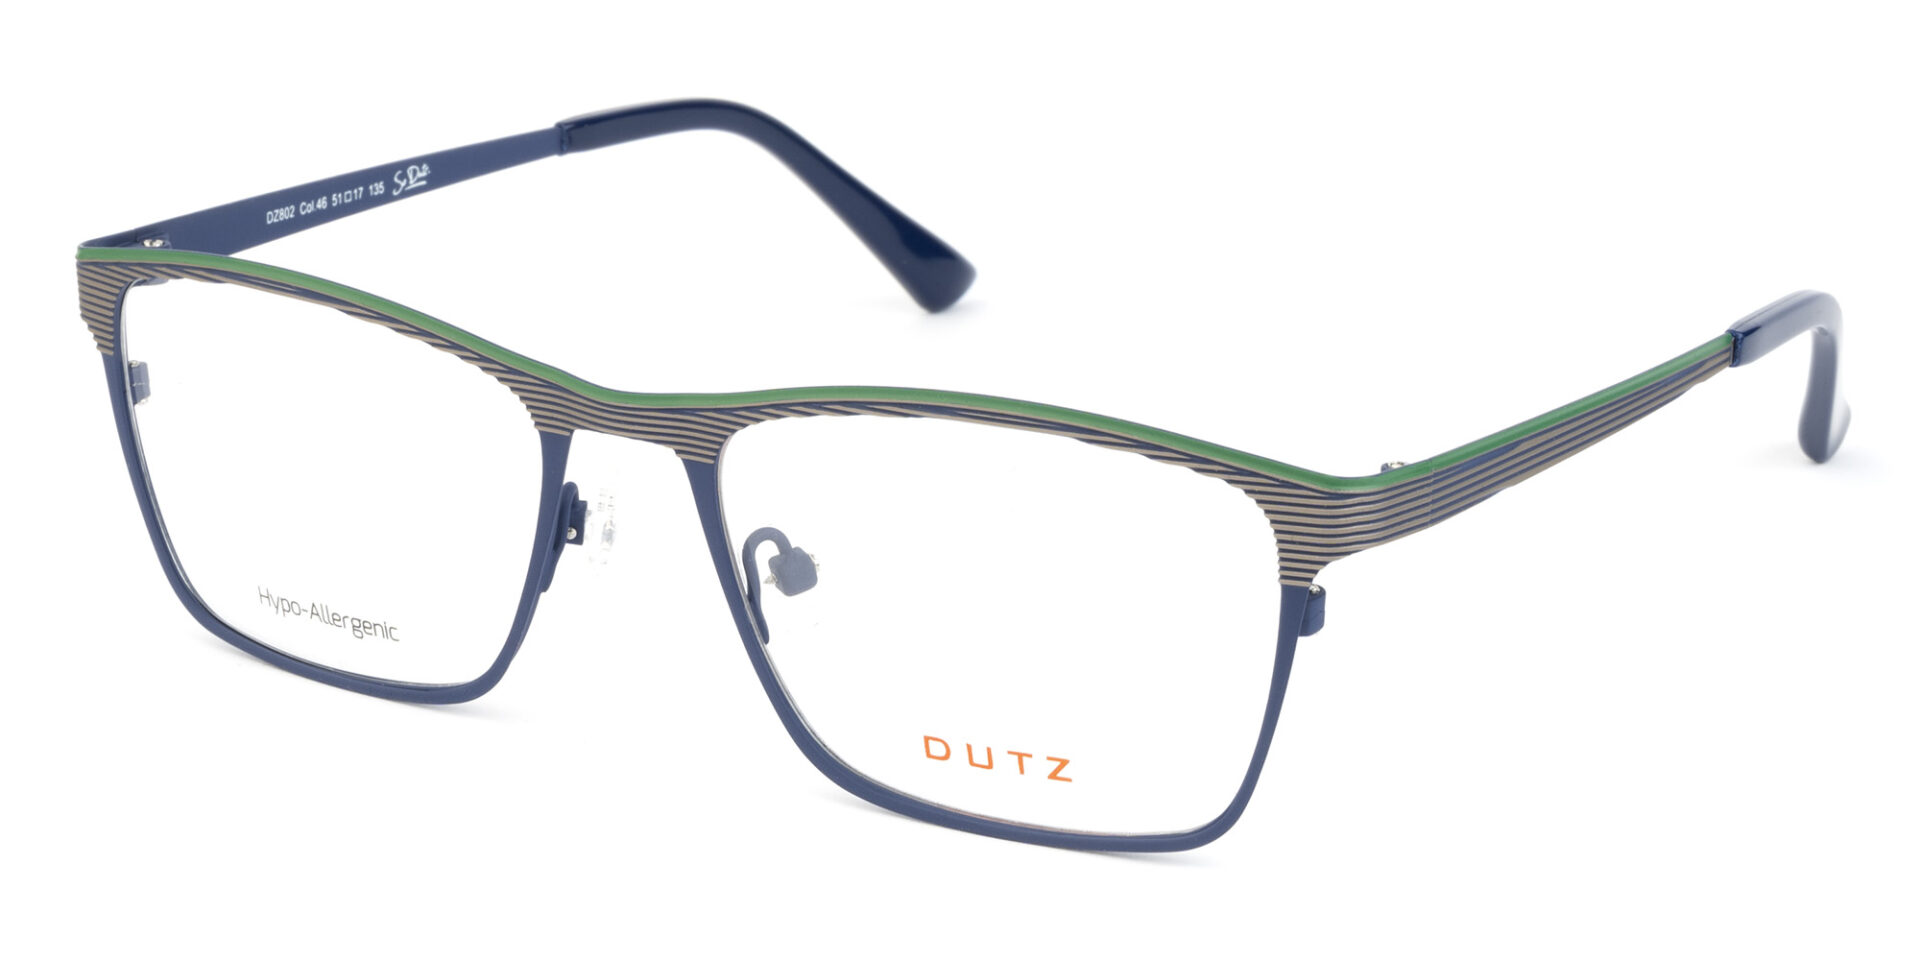 DZ802 (51-17/135) - Dutz Eyewear